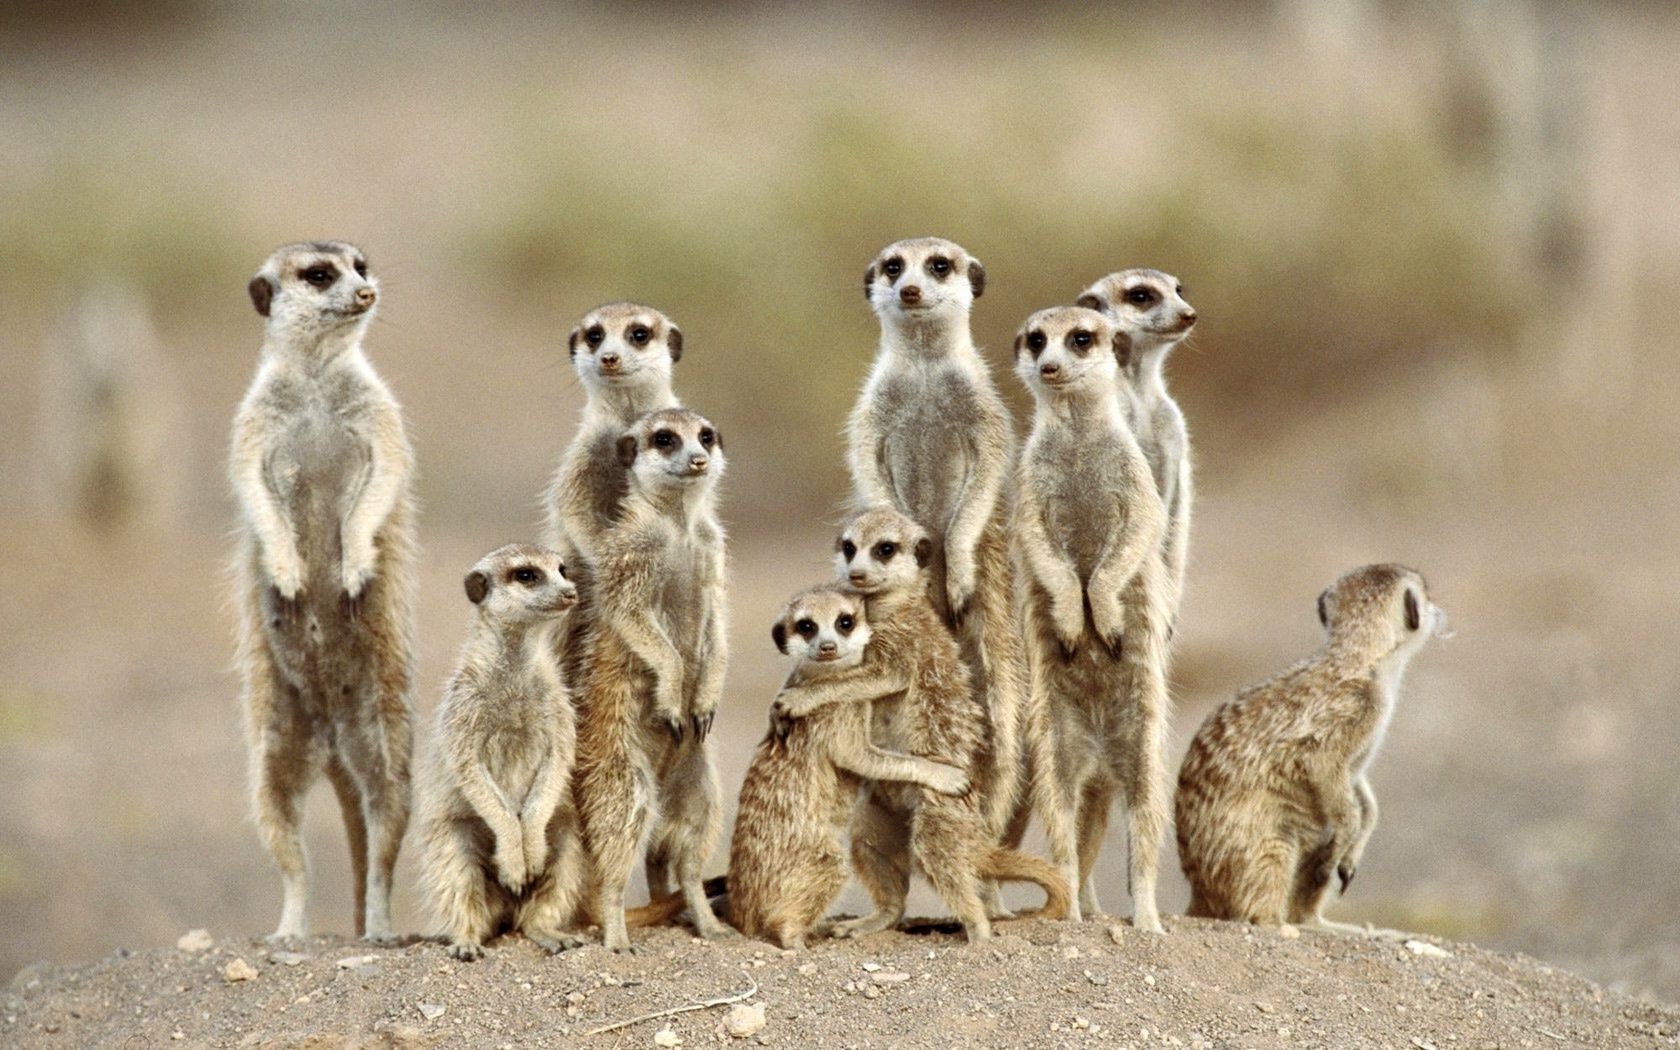 animals wildlife nature mammal cute animal alert outdoors wild grass meerkat